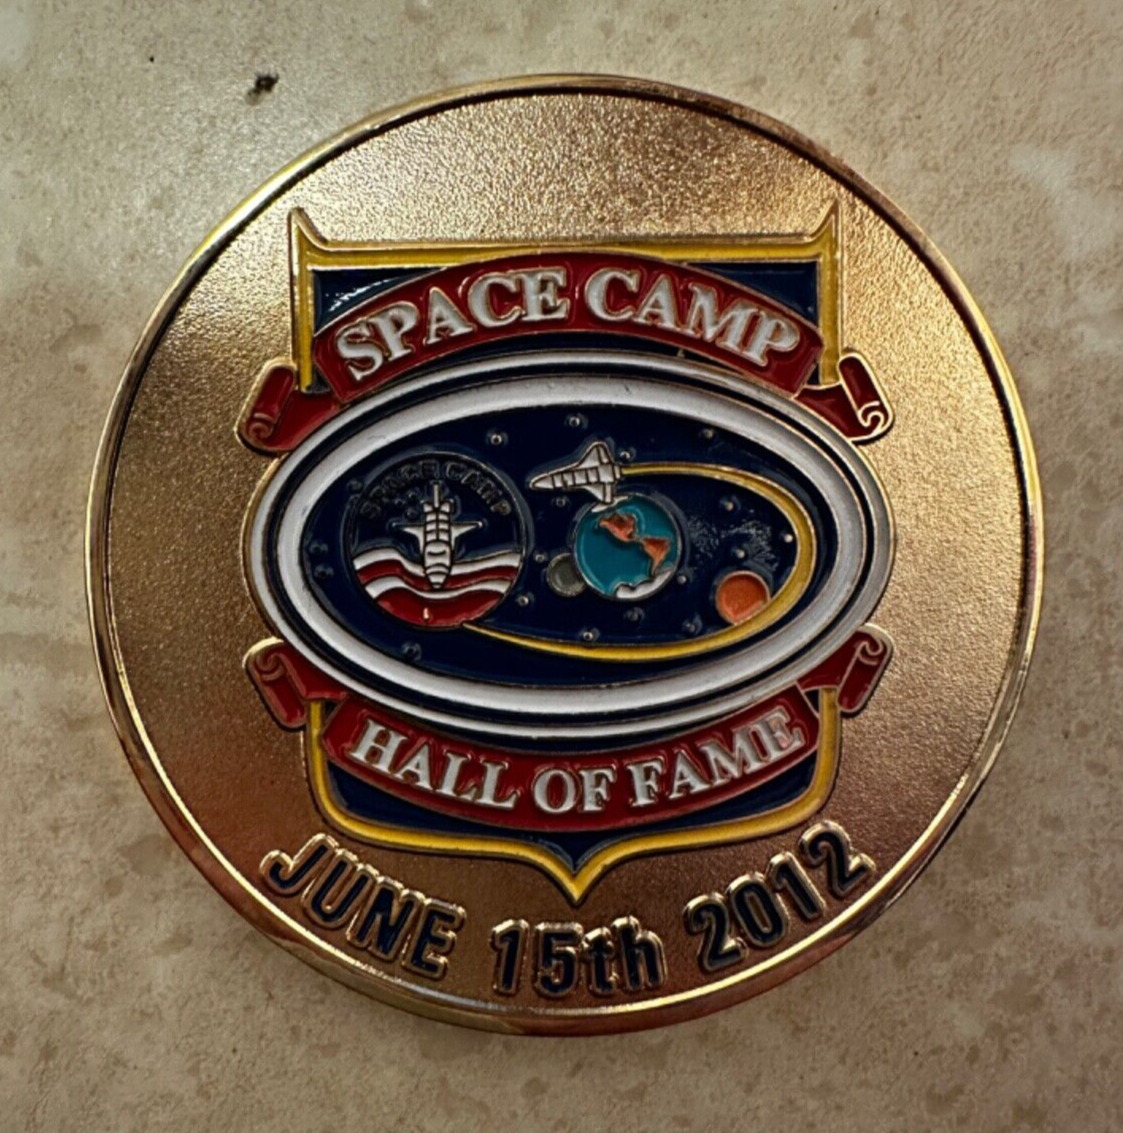 2012 NASA Space Camp Hall Of Fame Program Challenge Coin Abbams Gibson Warren